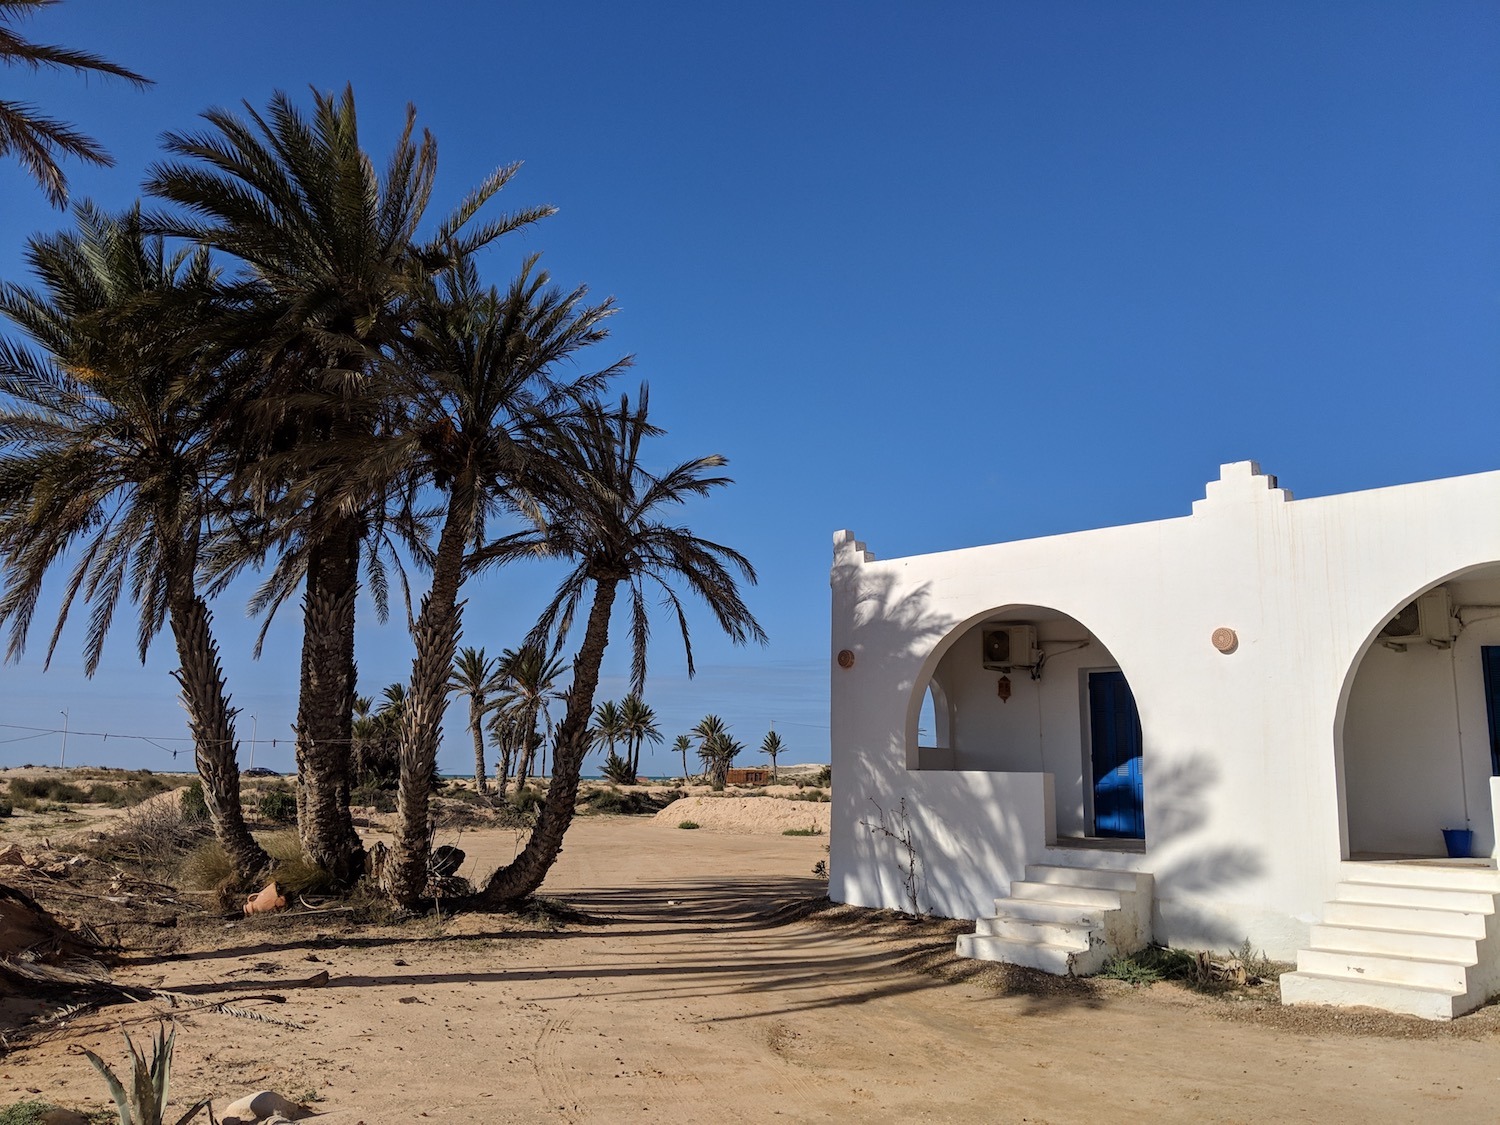 Dar Chick Yahia: A sustainable B&B on the Tunisian island of Djerba